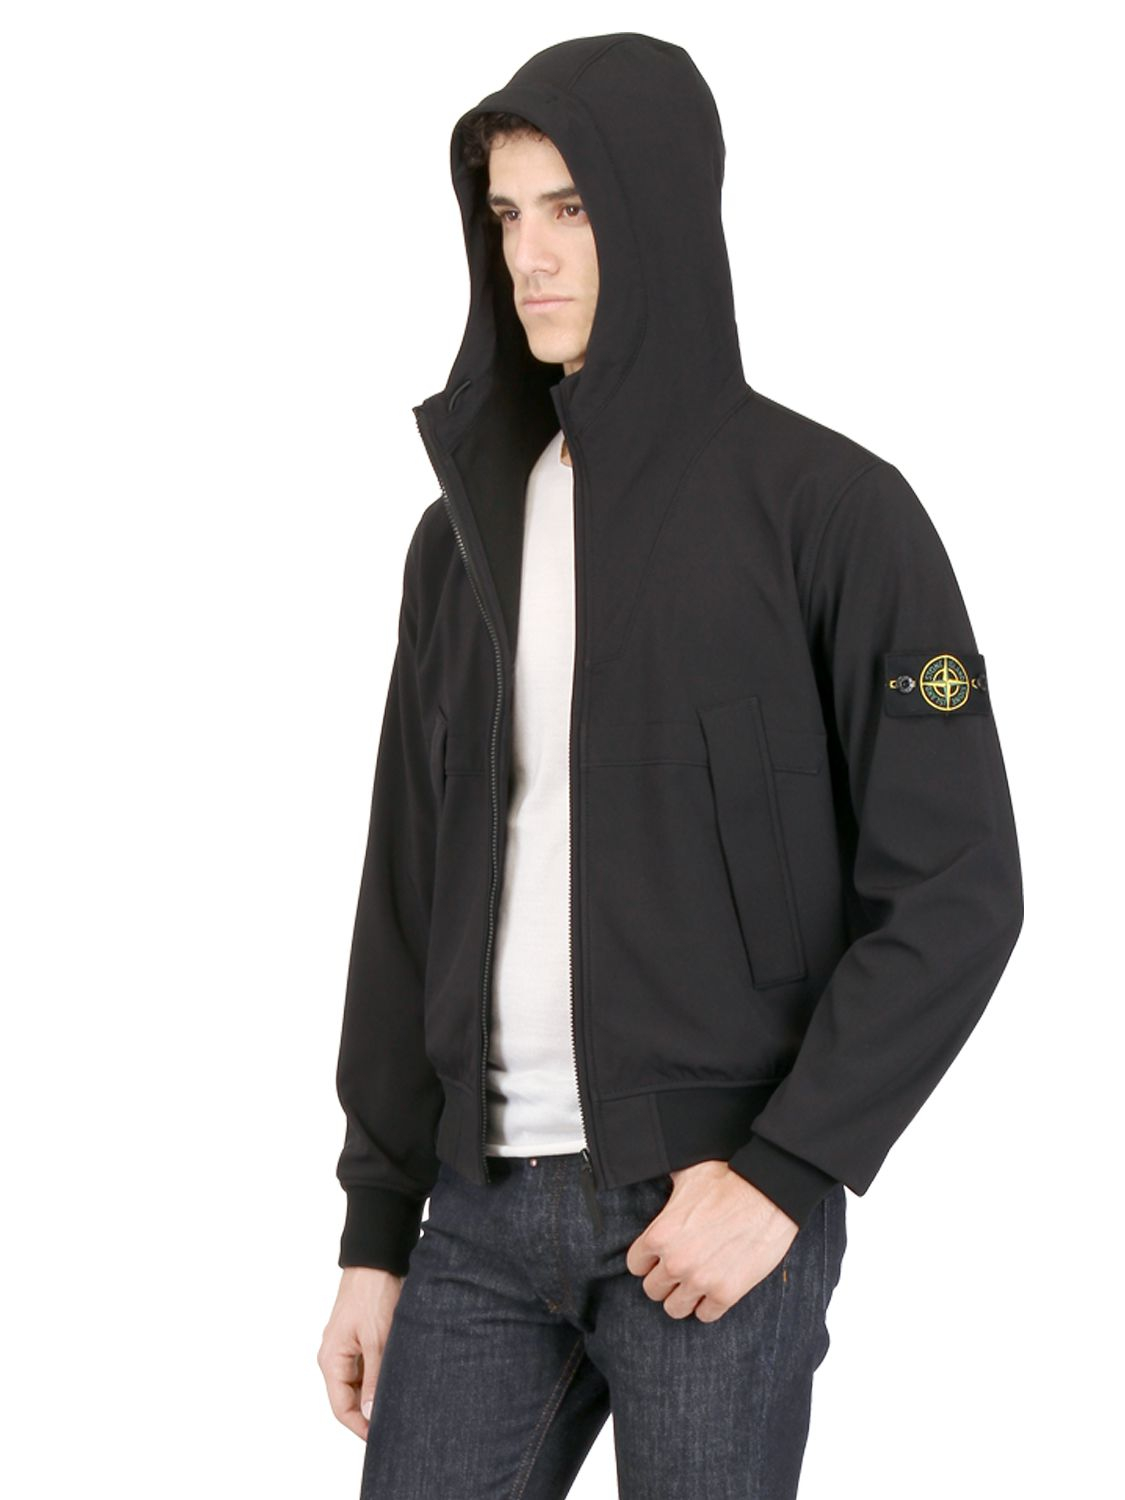 q0422 soft shell r hooded jacket black, Off 68%, www.scrimaglio.com